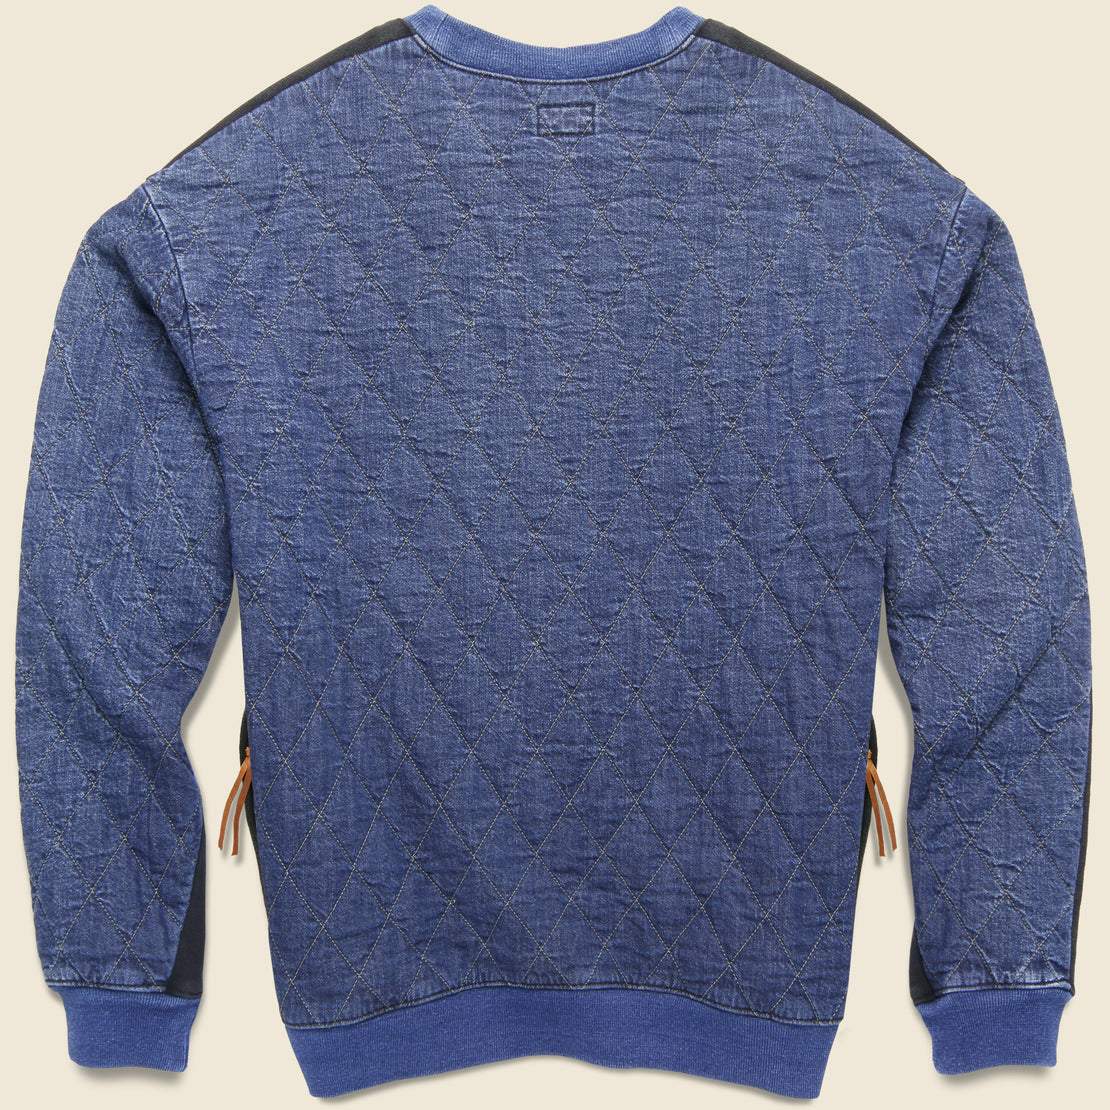 Fleece Knit x Denim Quilting NAVY 2Tones Big Sweater - Indigo - Kapital - STAG Provisions - Tops - Sweater